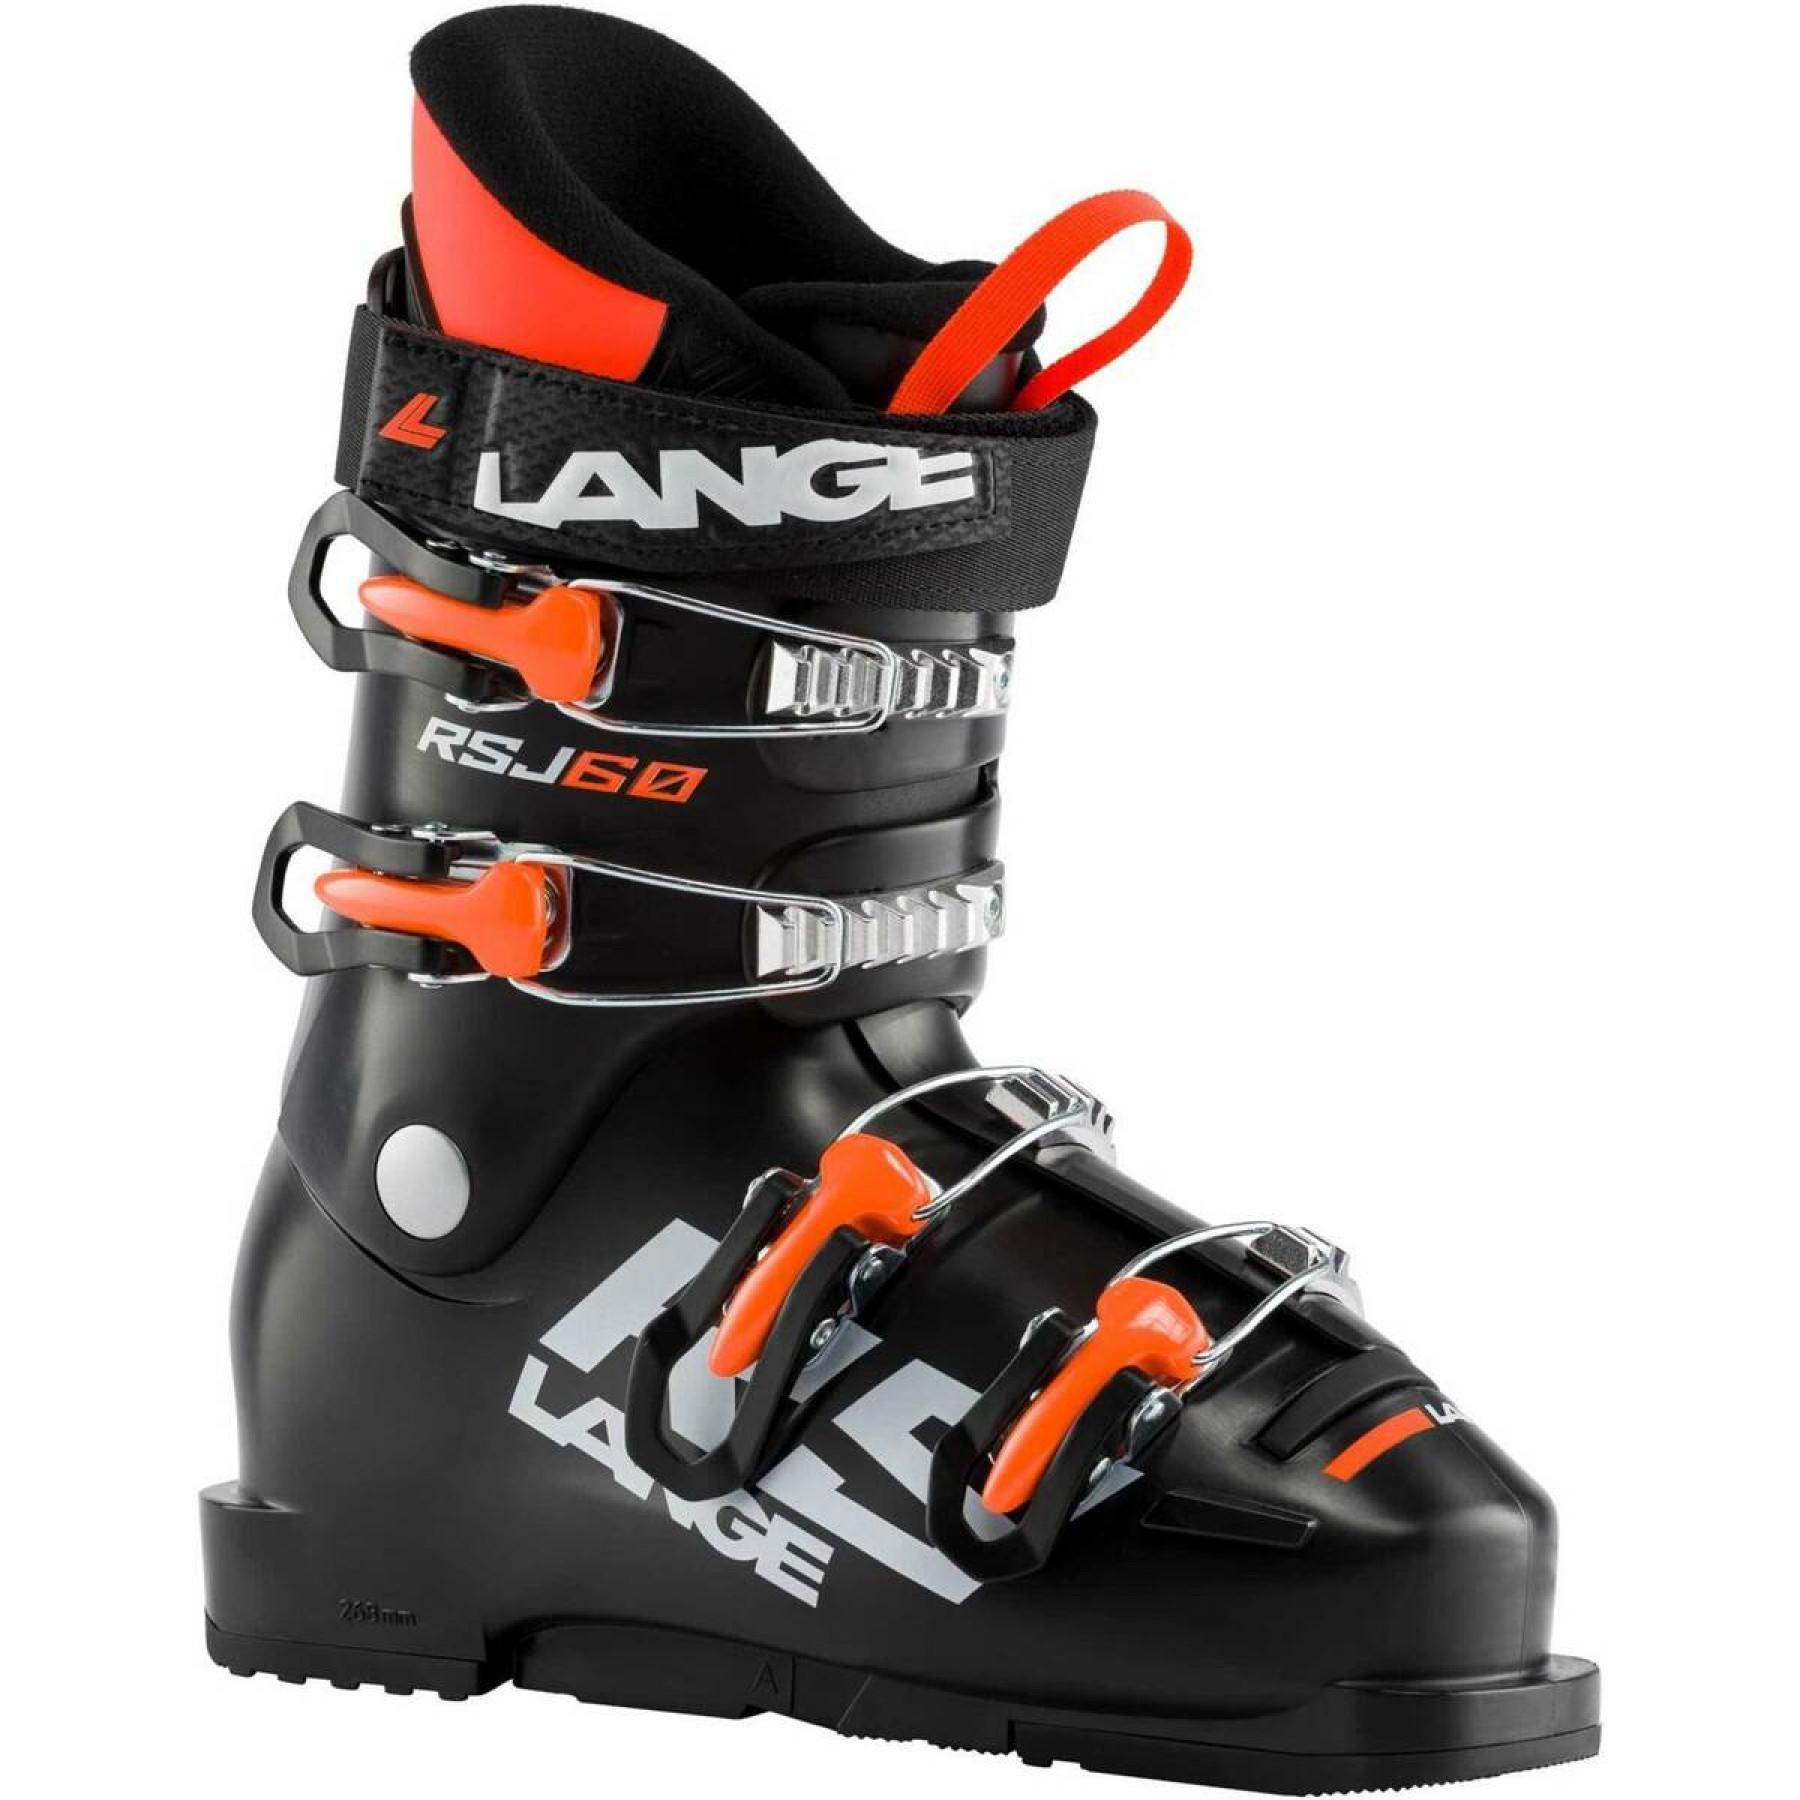 Children's ski boots Lange rsj 60